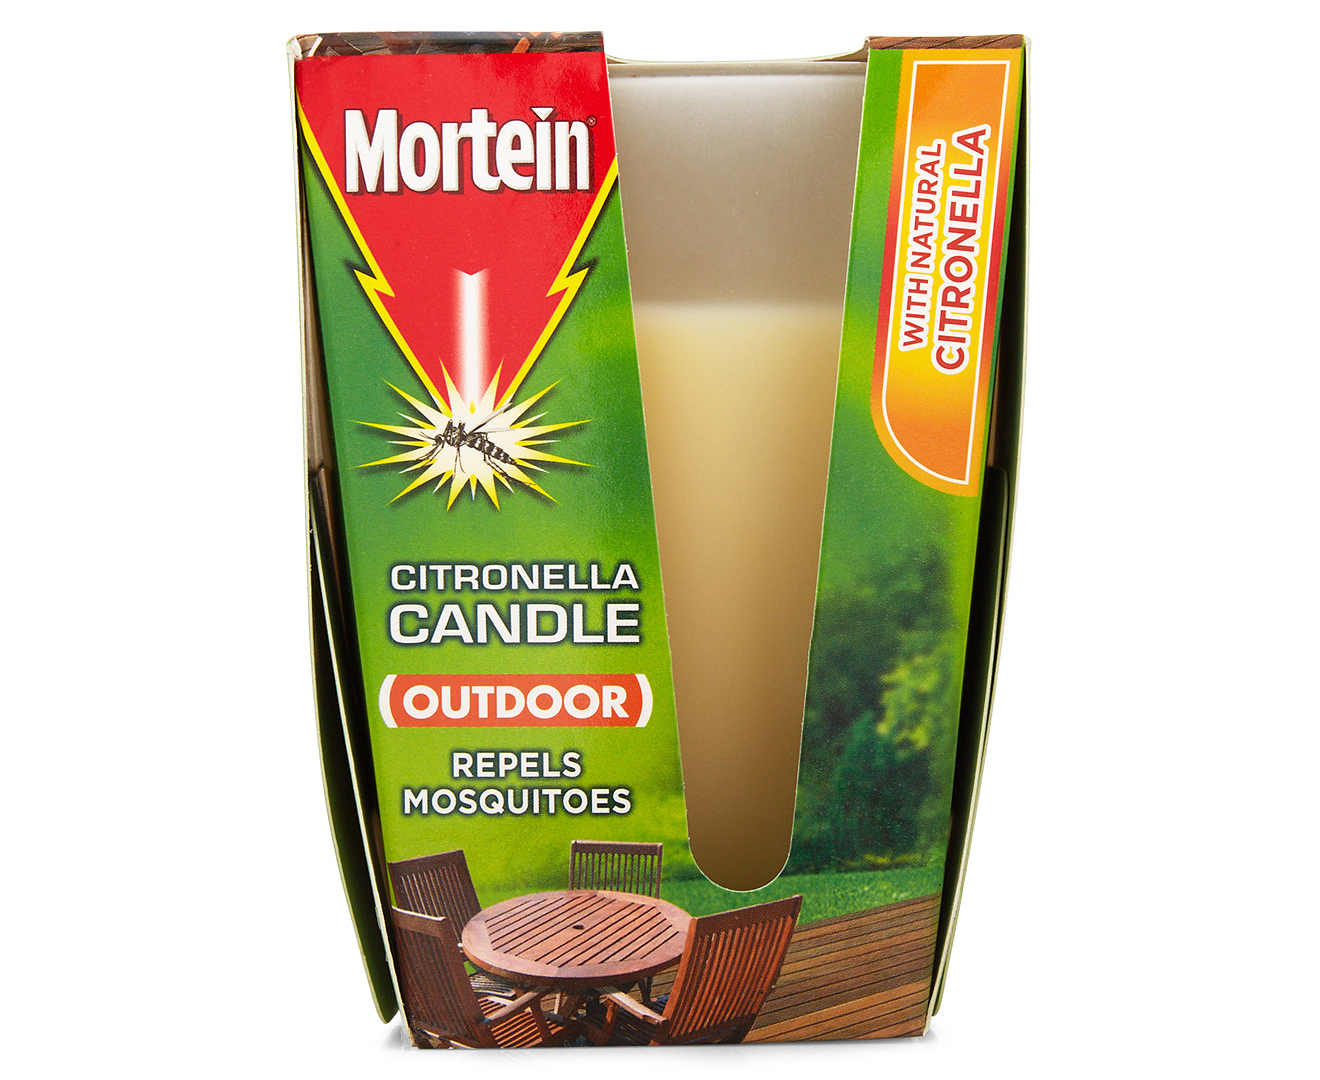 Mortein Outdoor Citronella Mosquito Repellent Candle 425g